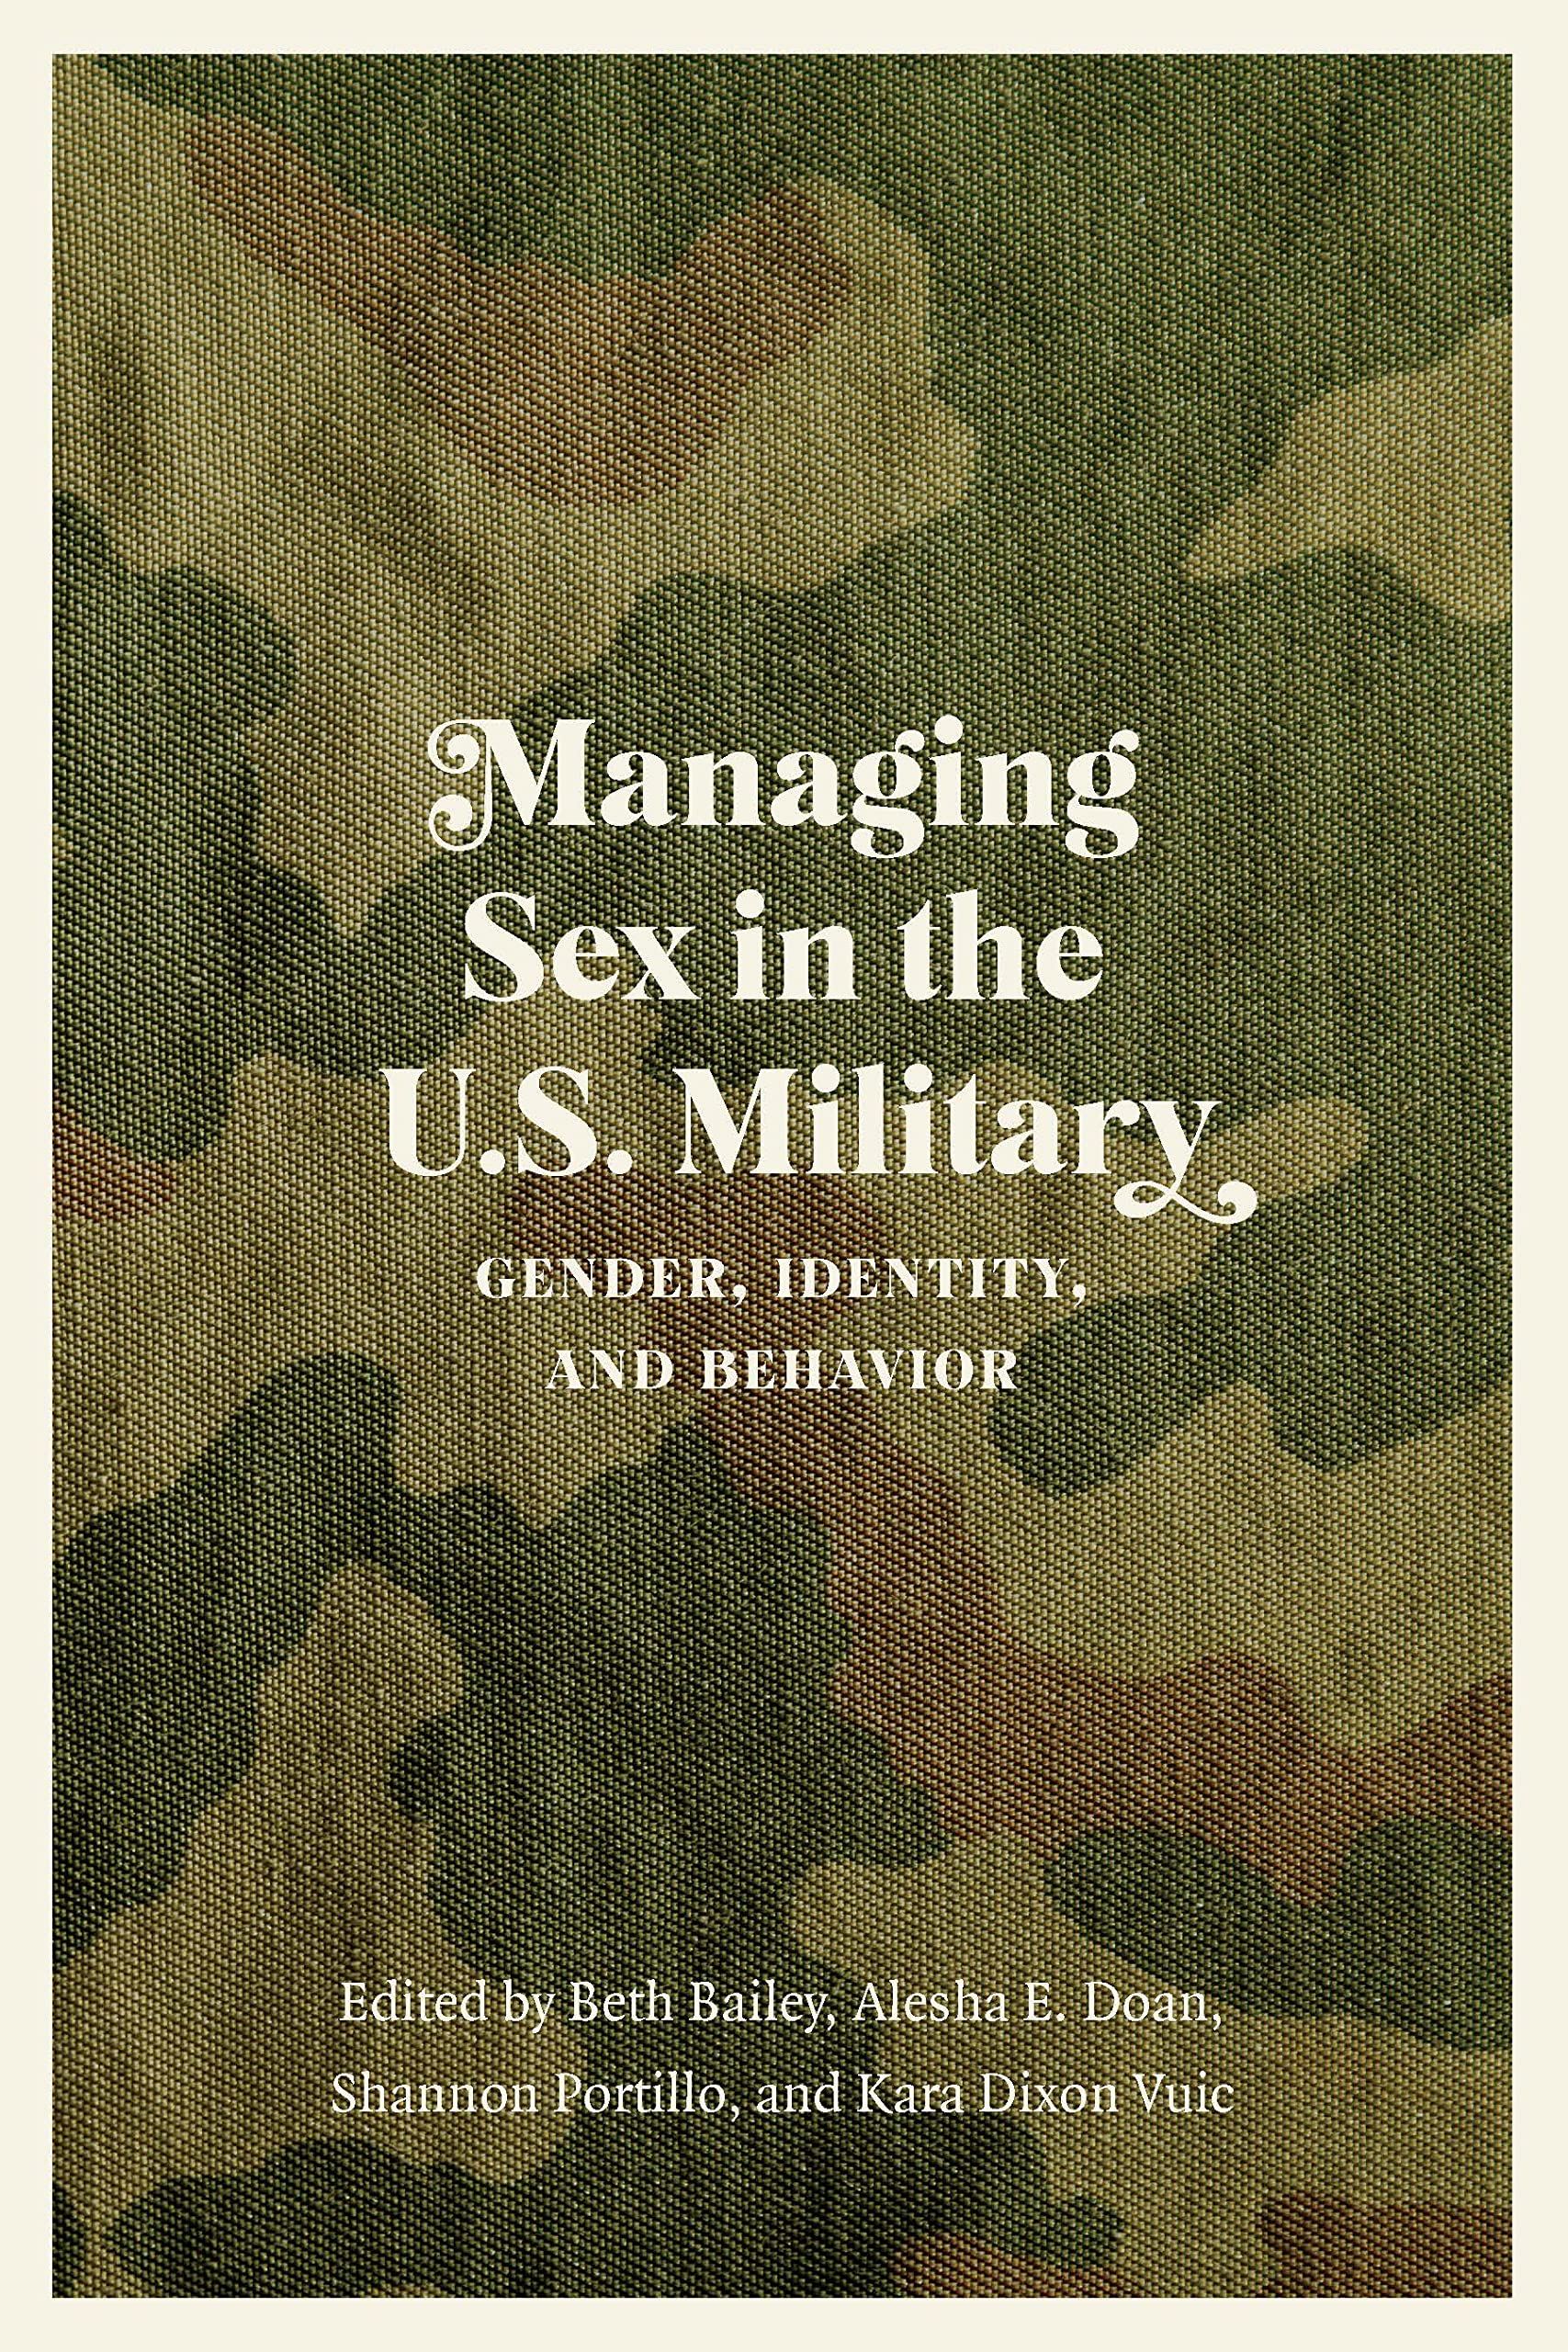 Managing Sex in the U.S. Military